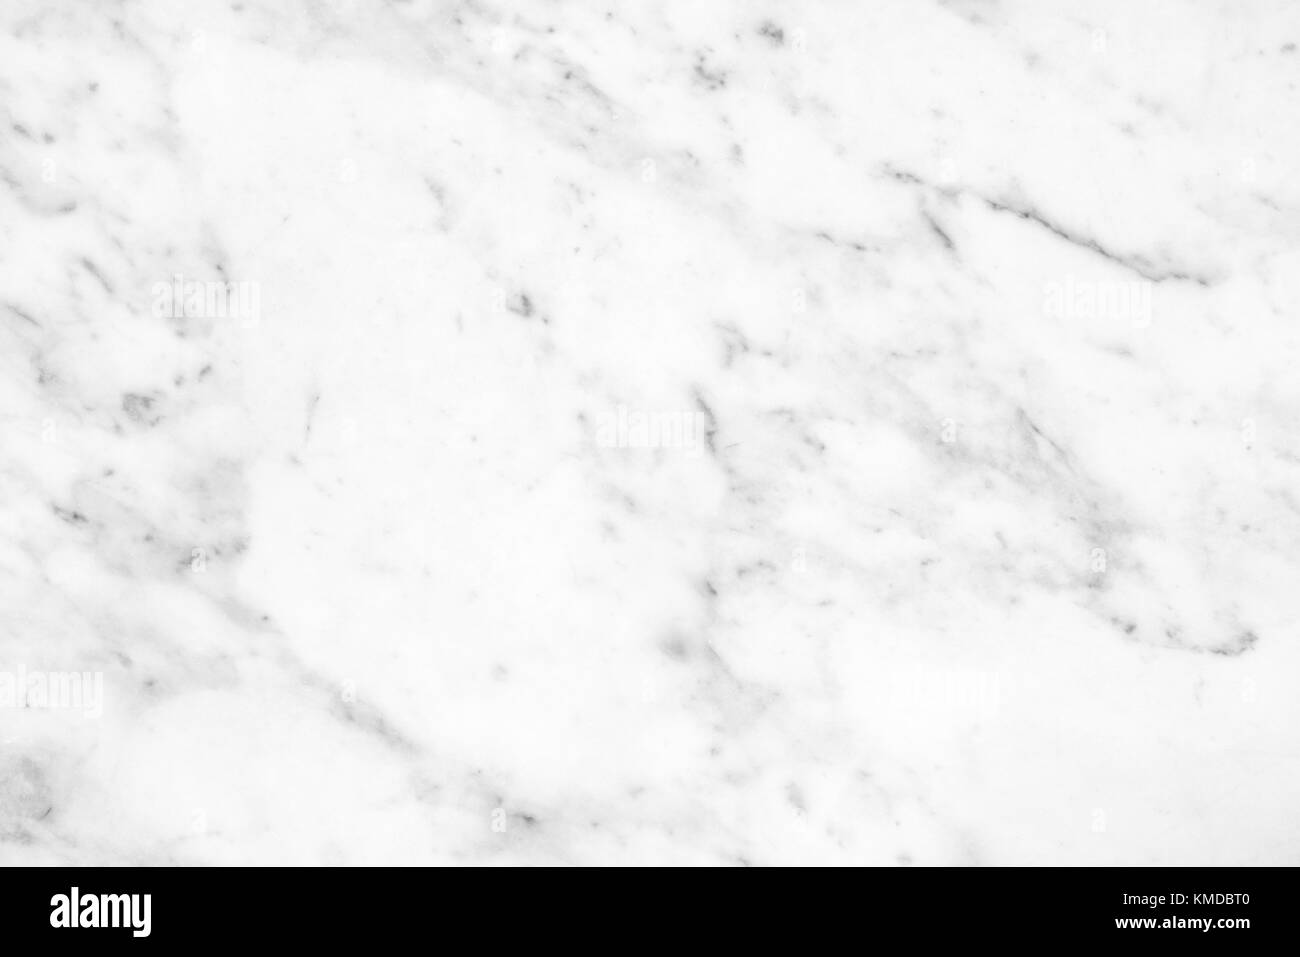 https://c8.alamy.com/comp/KMDBT0/white-carrara-marble-natural-light-for-bathroom-or-kitchen-white-countertop-KMDBT0.jpg